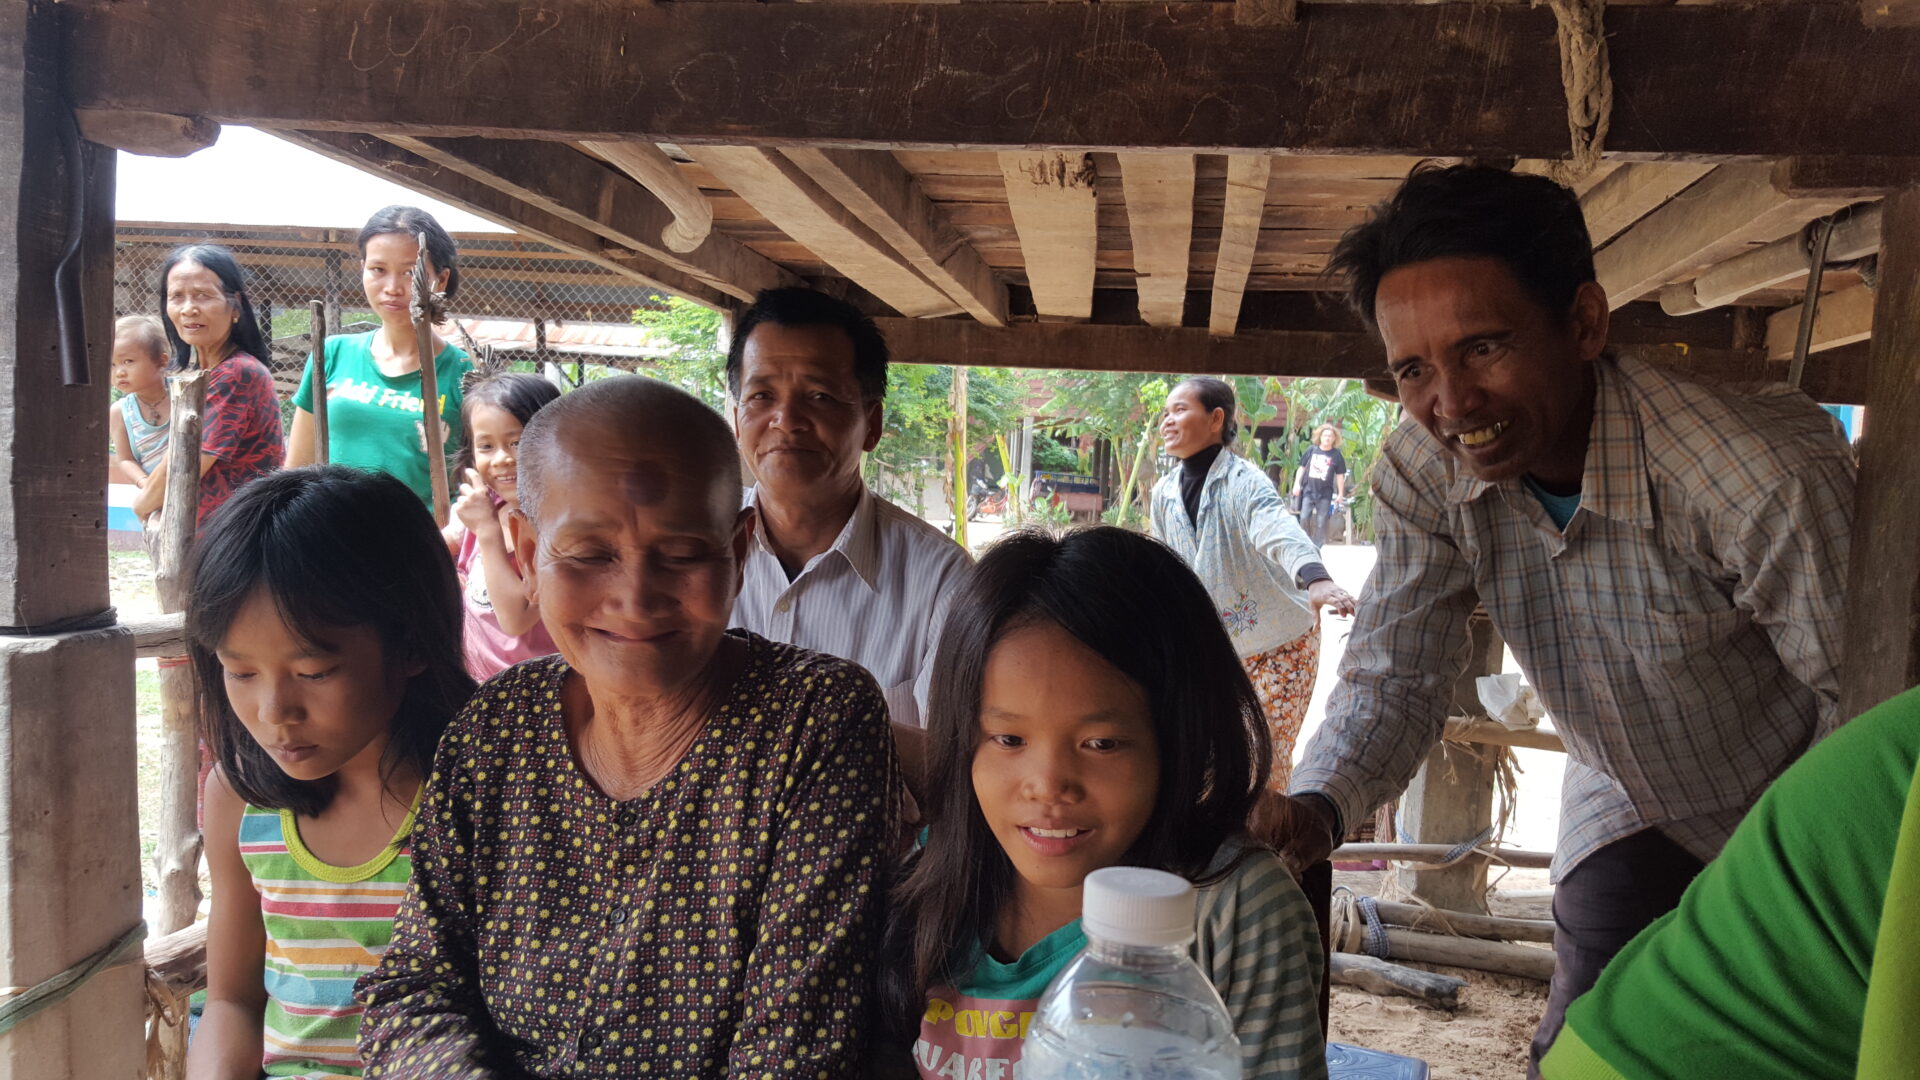 Older people associations in Battambang